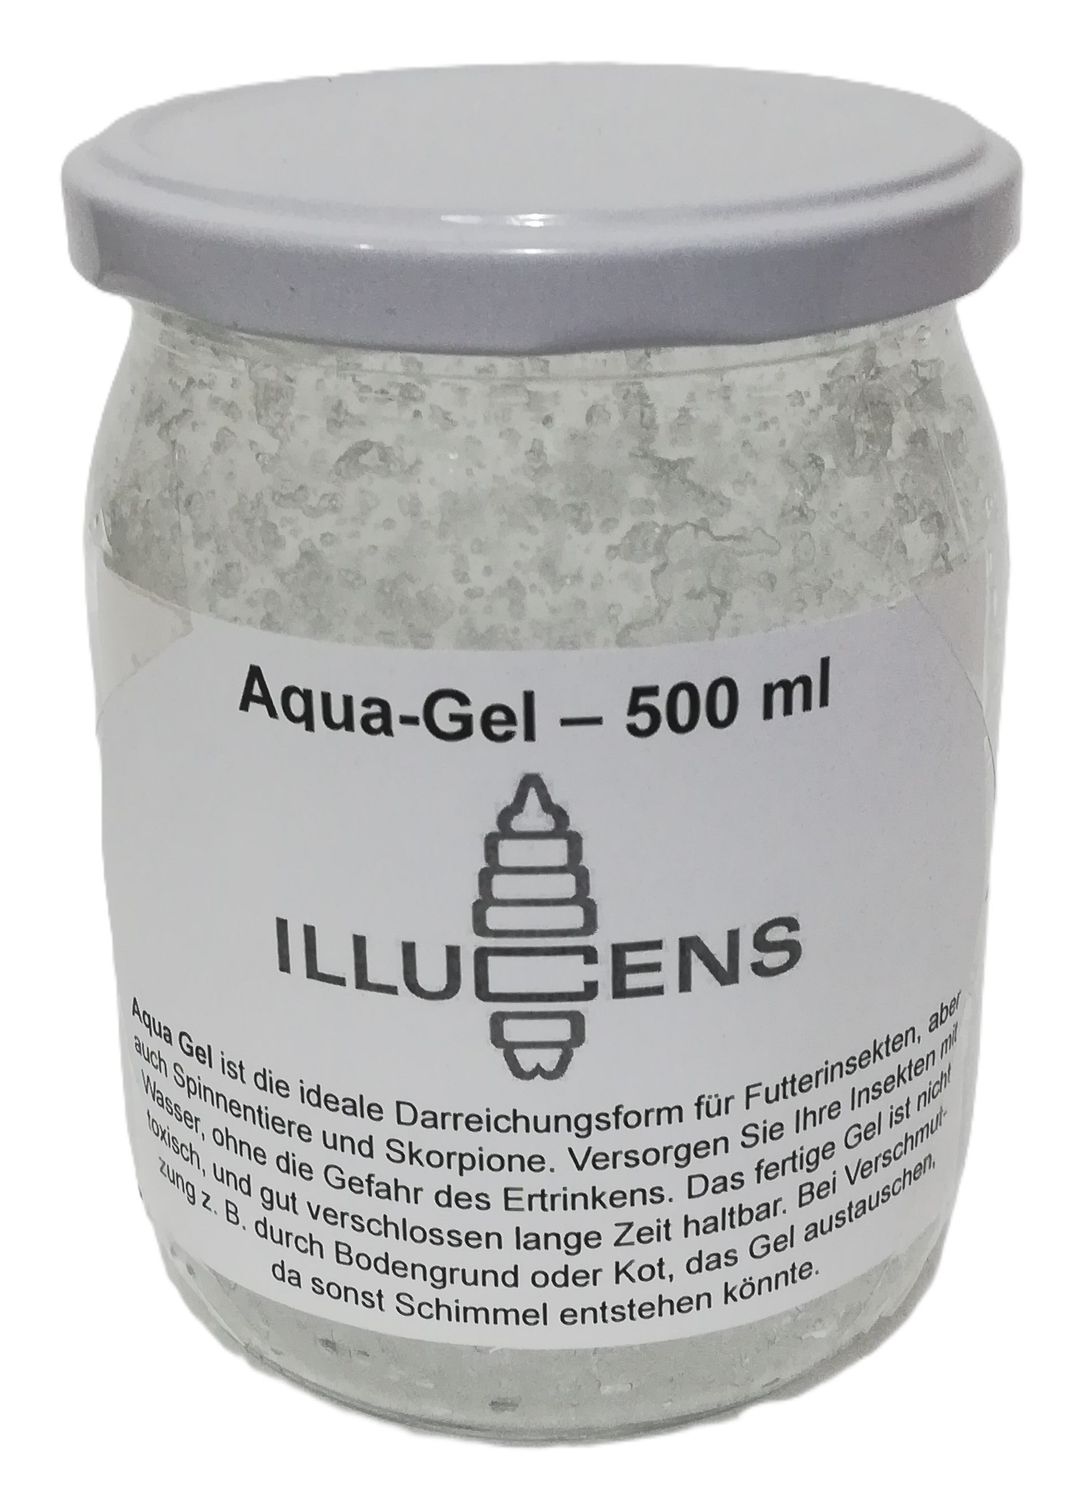 Aqua Gel im Glas 500 ml
19,00 €/l